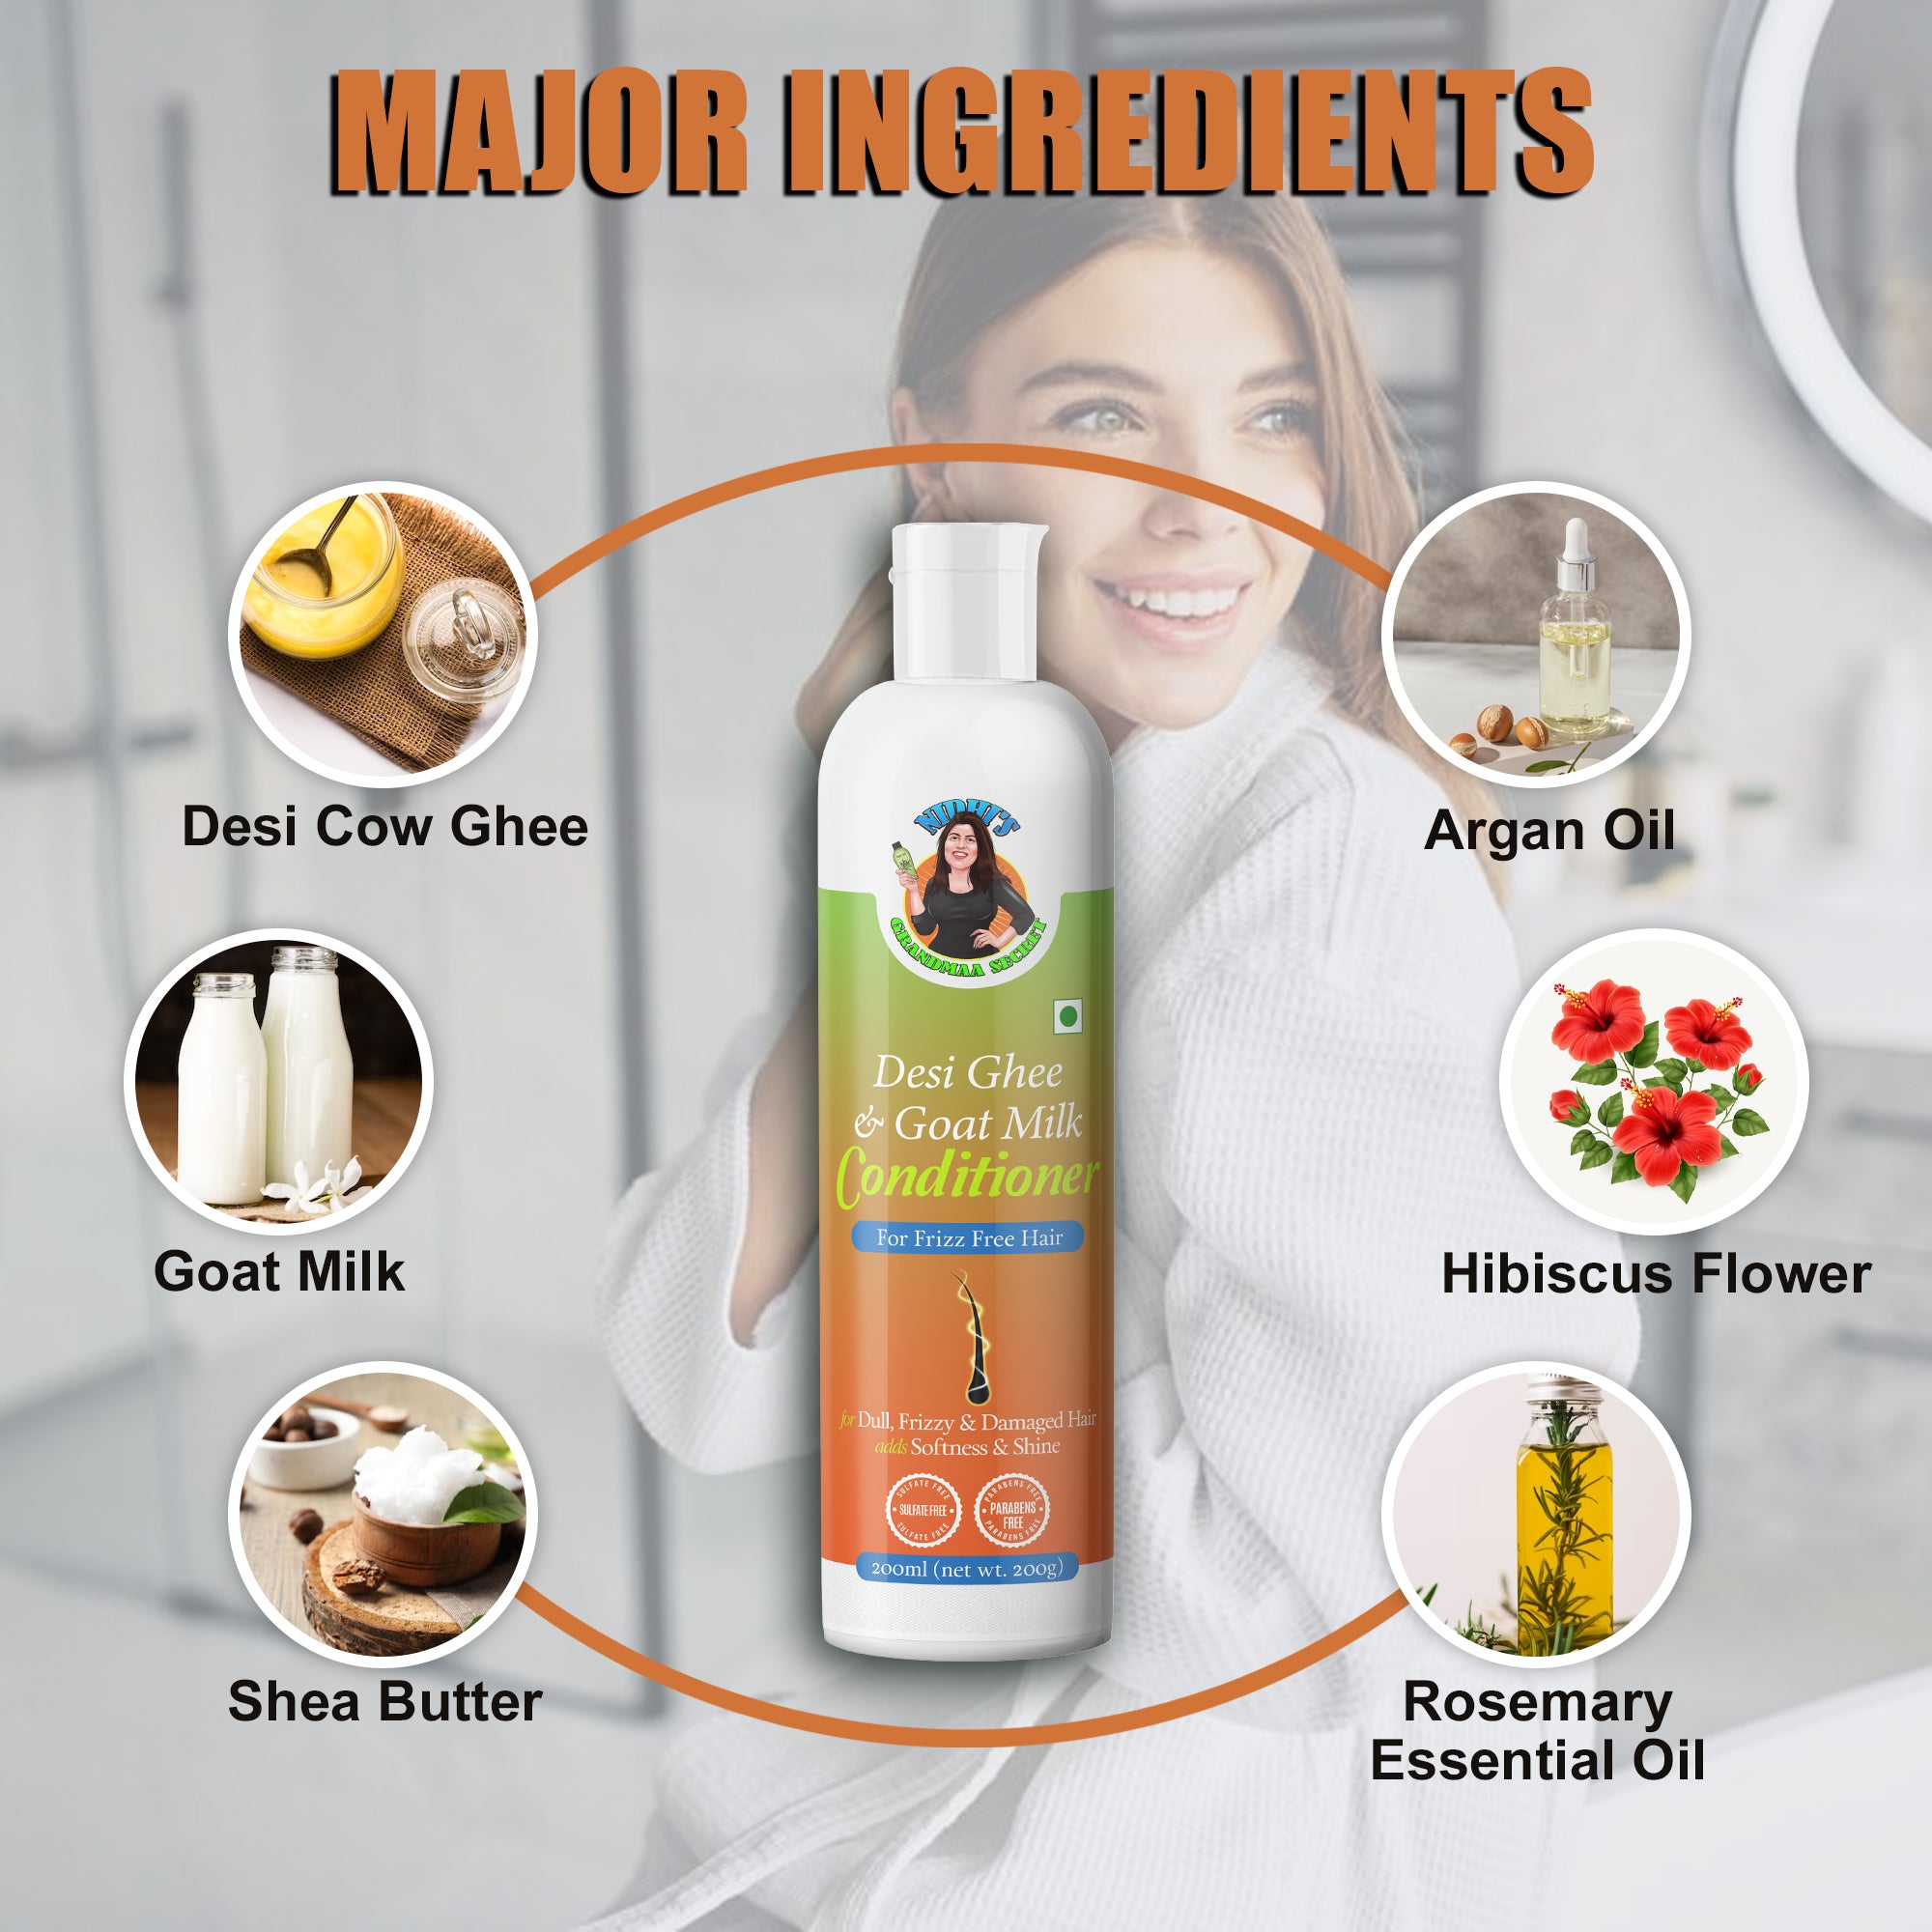 Desi Ghee & Goat Milk Conditioner for Dry & Damaged Hair - 200ML